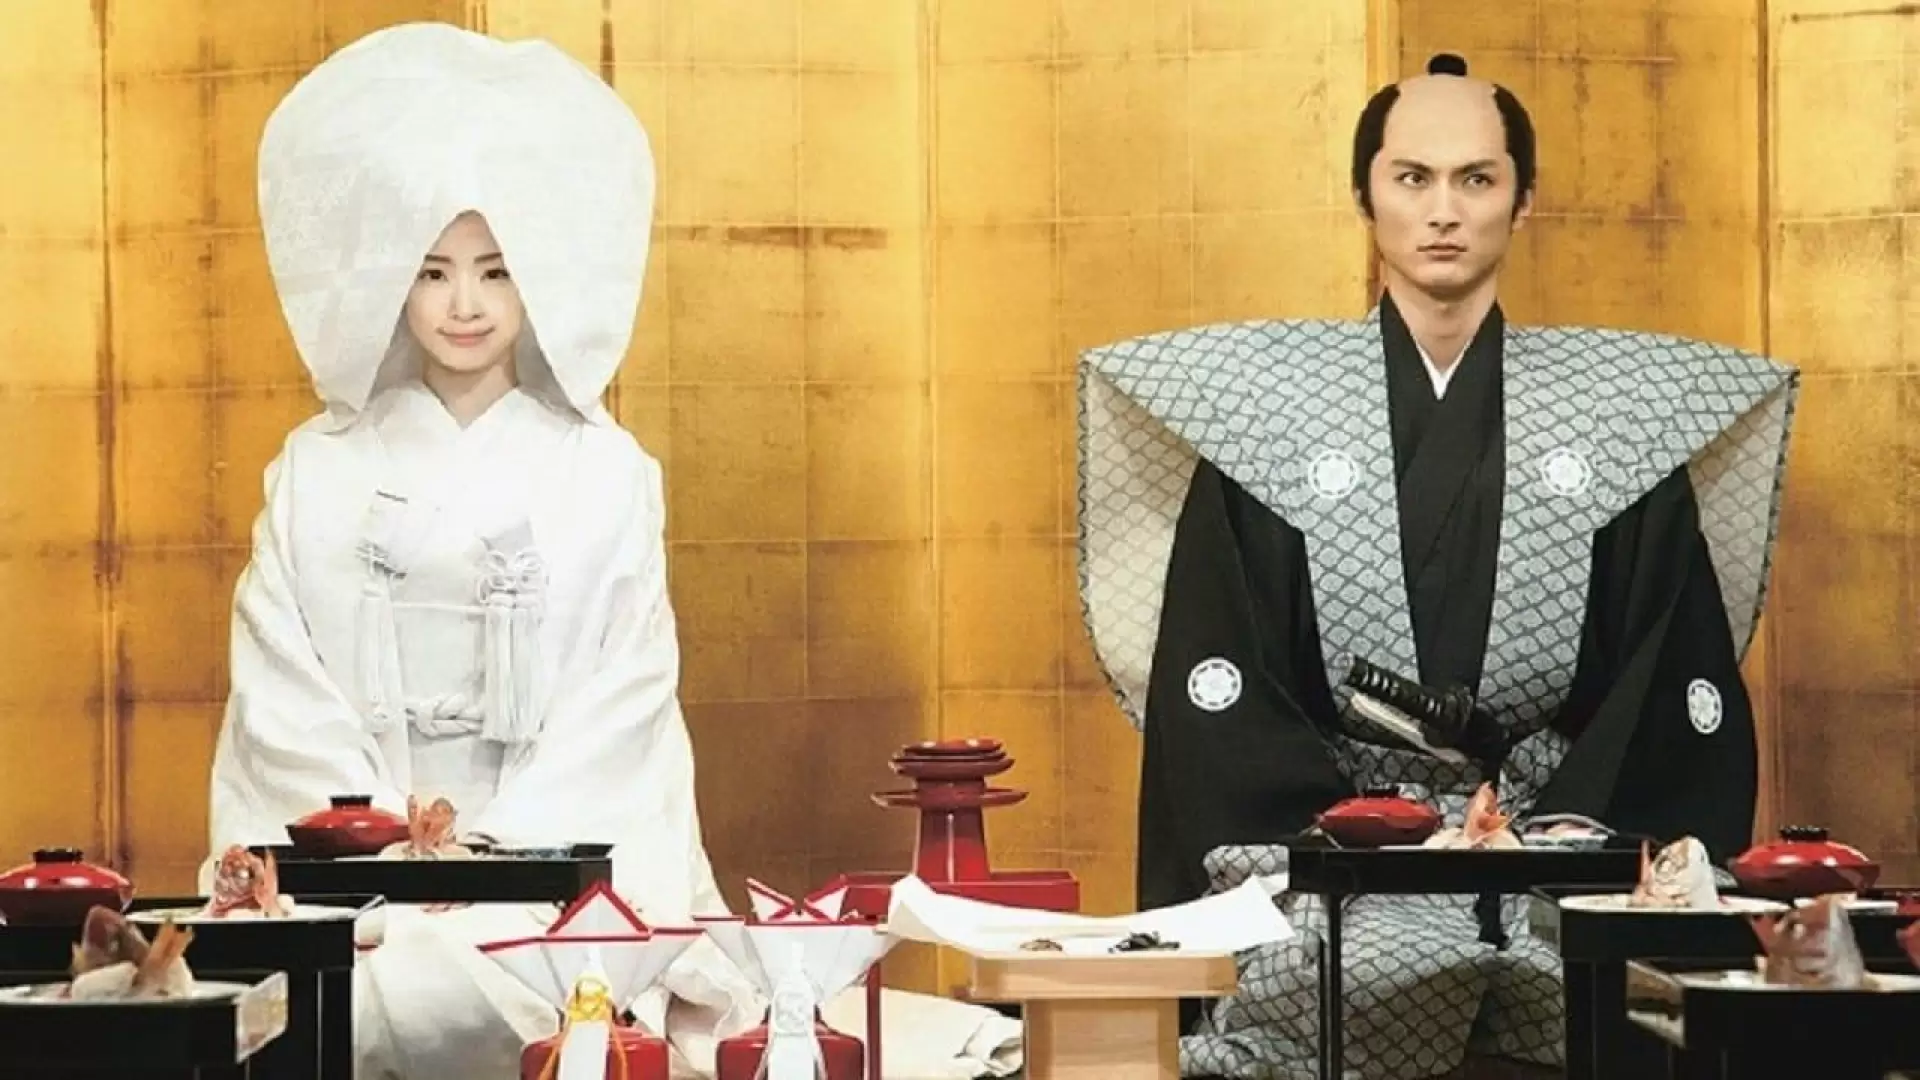 دانلود فیلم A Tale of Samurai Cooking: A True Love Story 2013